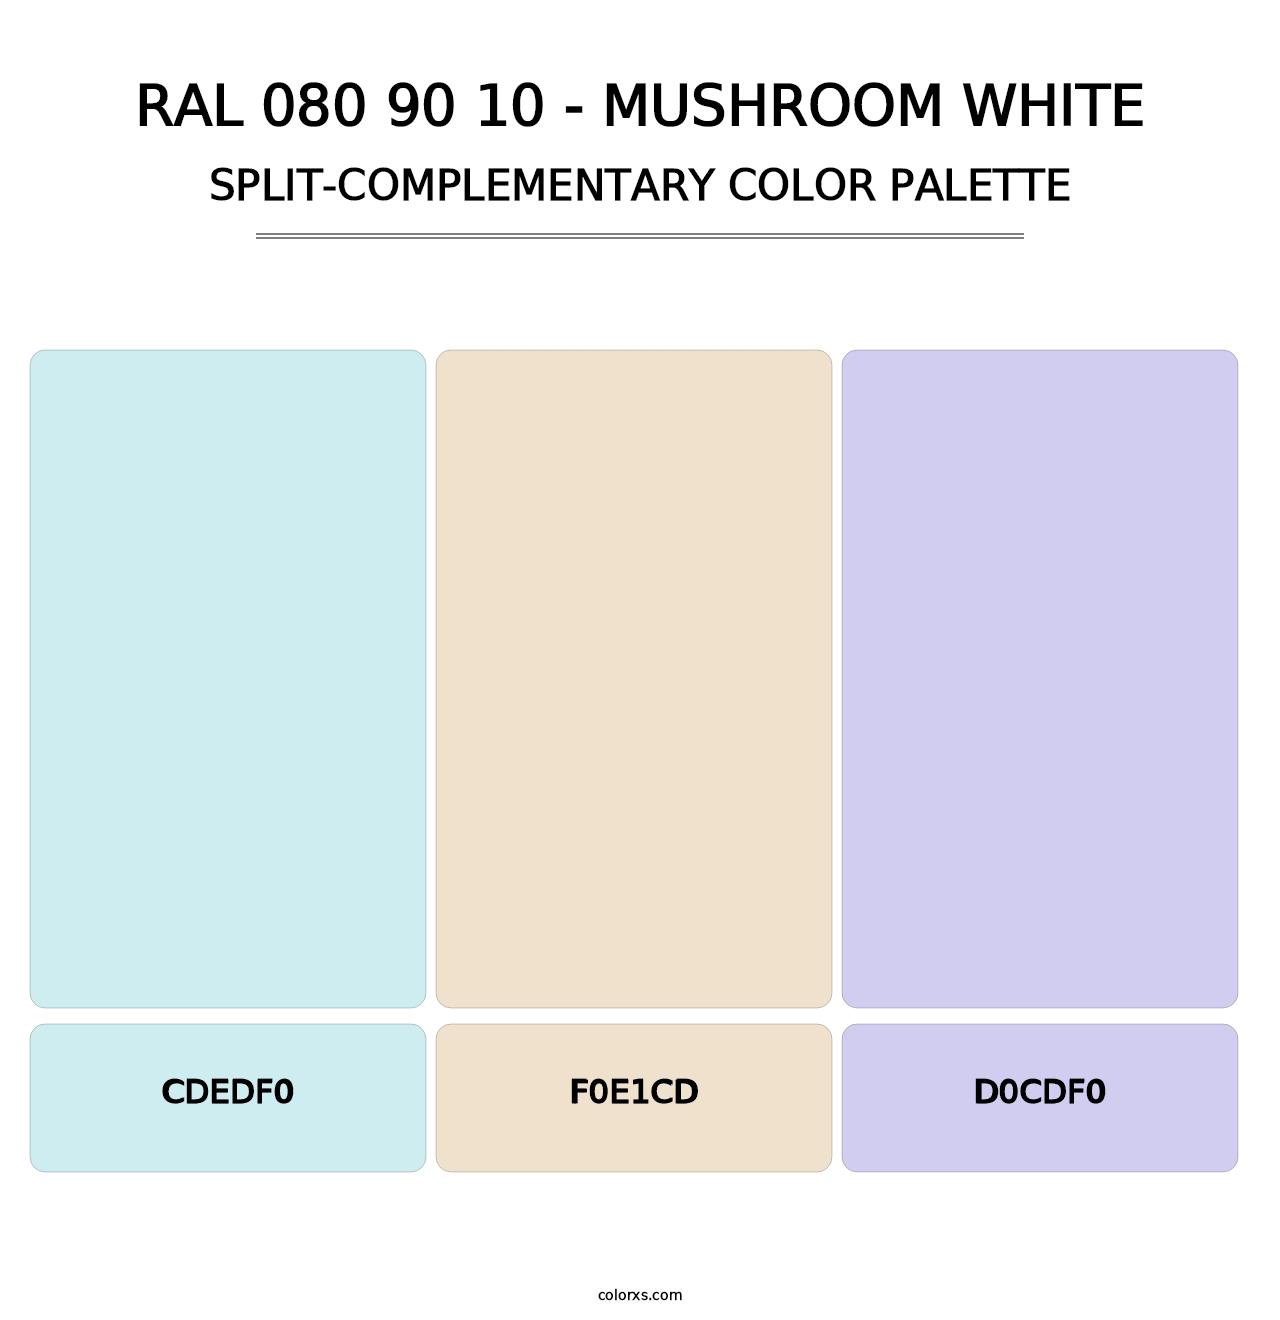 RAL 080 90 10 - Mushroom White - Split-Complementary Color Palette